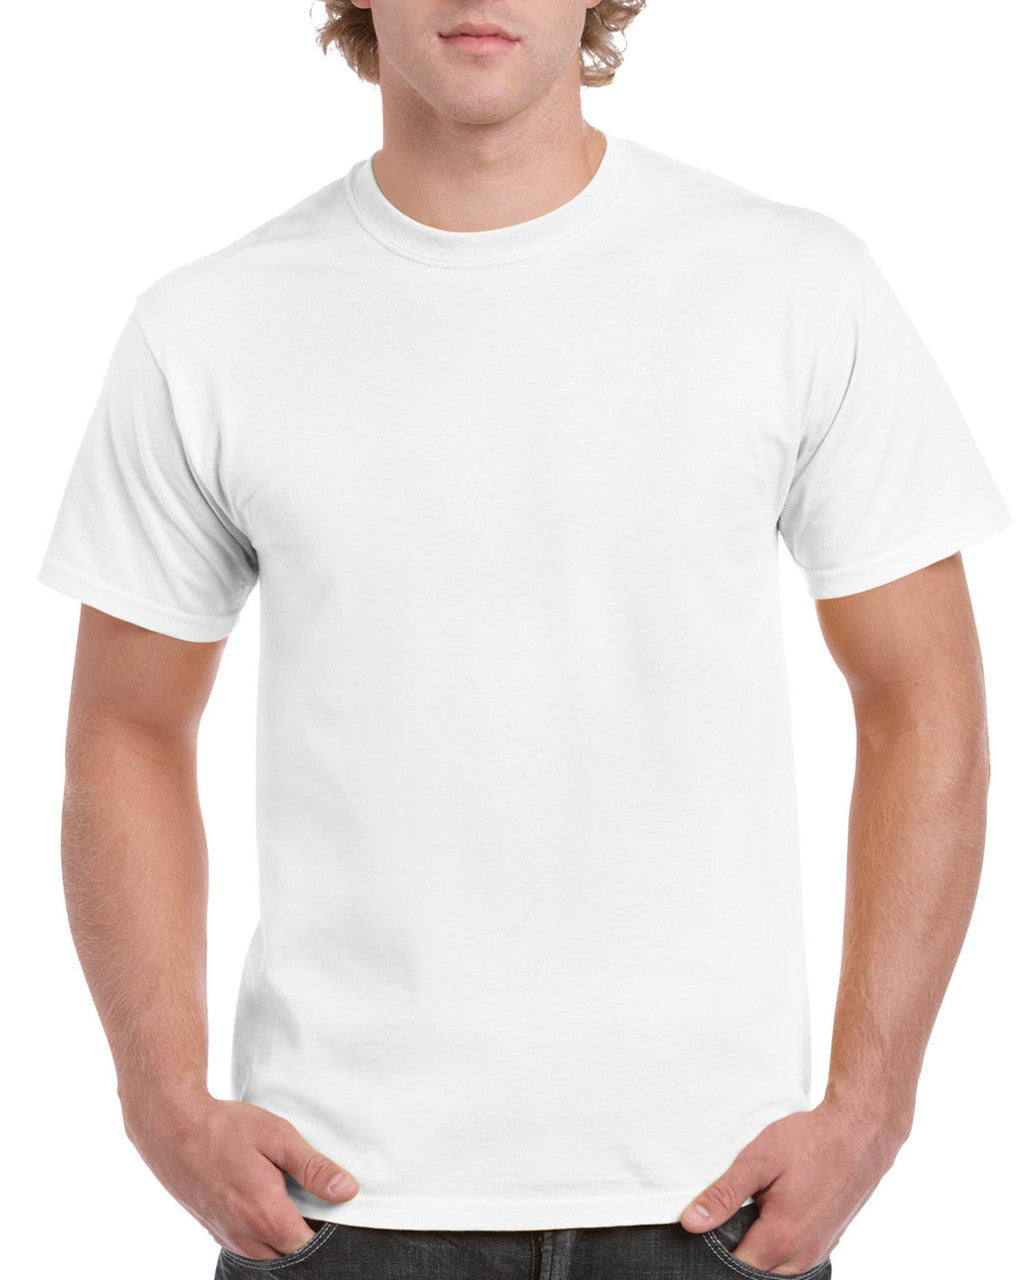 CLEARANCE Gildan T-Shirt - WHITE